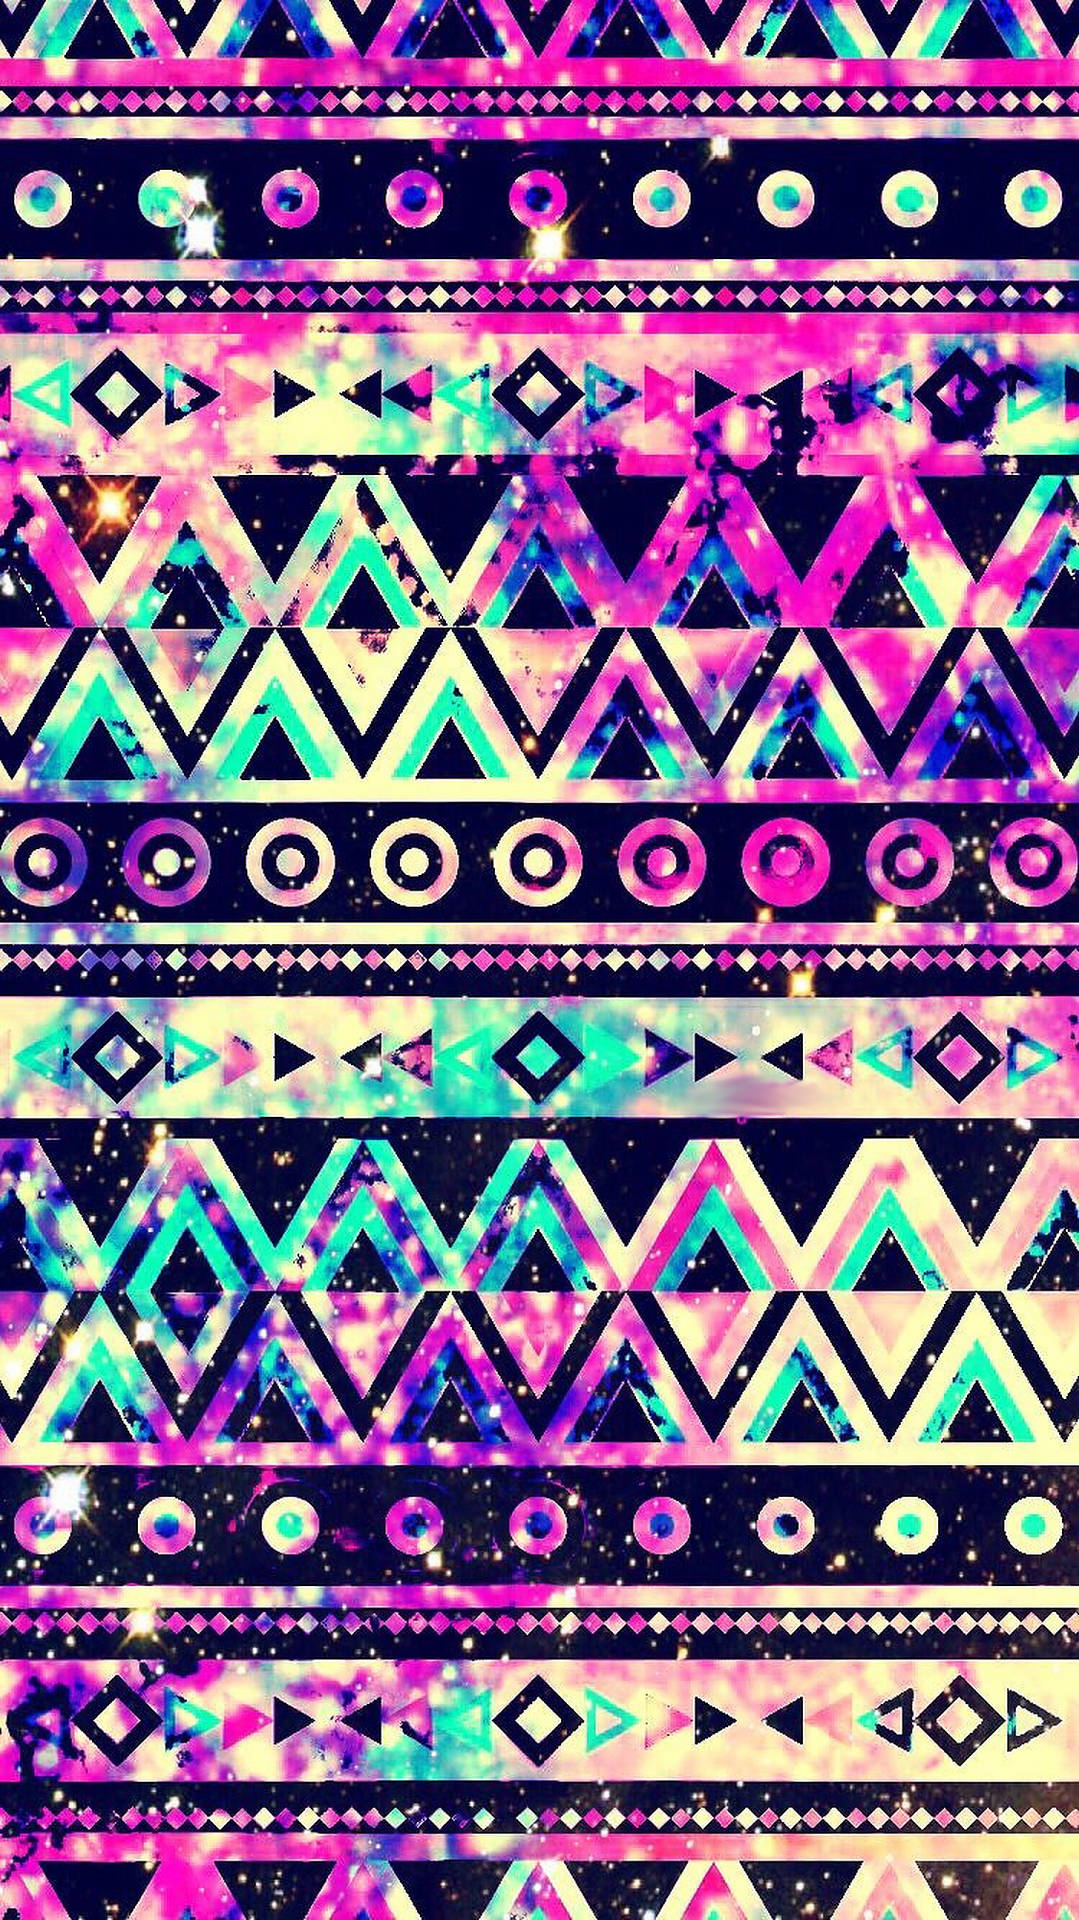 Free Tribal Pattern Wallpaper Downloads, [100+] Tribal Pattern Wallpapers  for FREE 